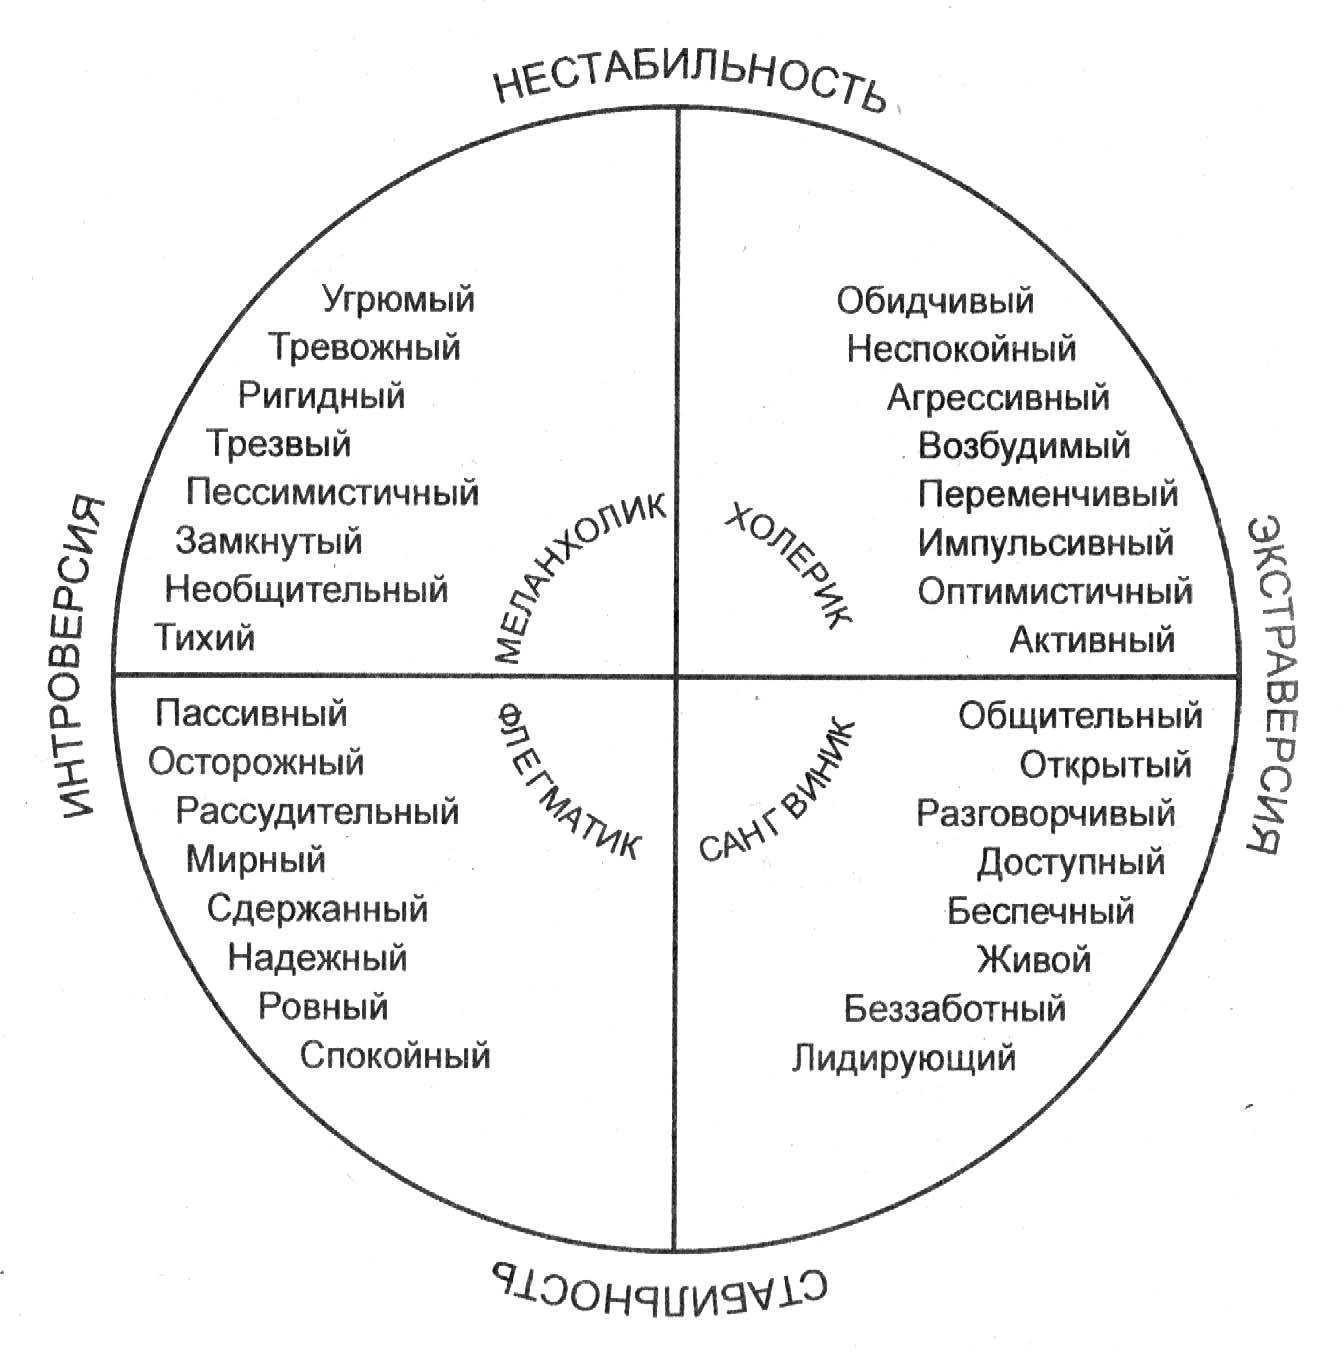 Амбиверт: каковы особенности темперамента, личности и характера? – impulsion.ru